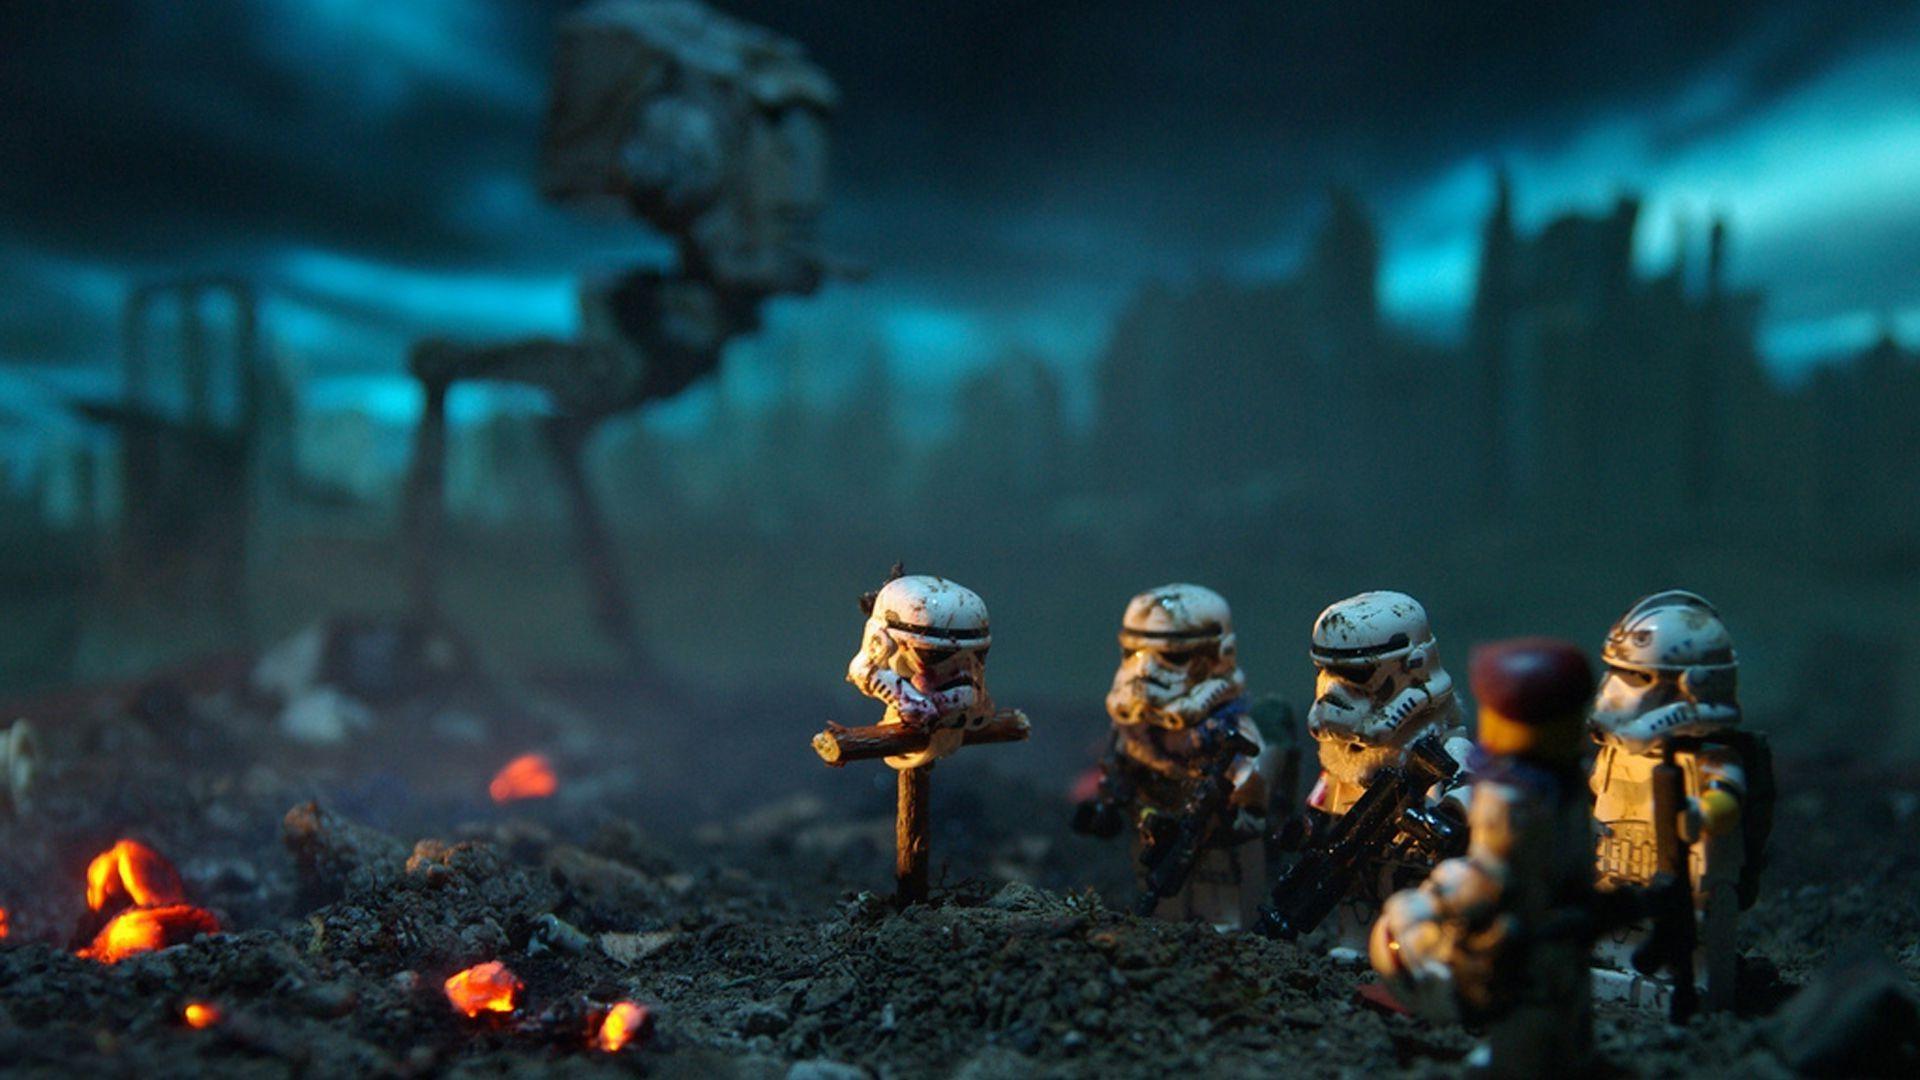 Lego Star Wars Wallpaper Background